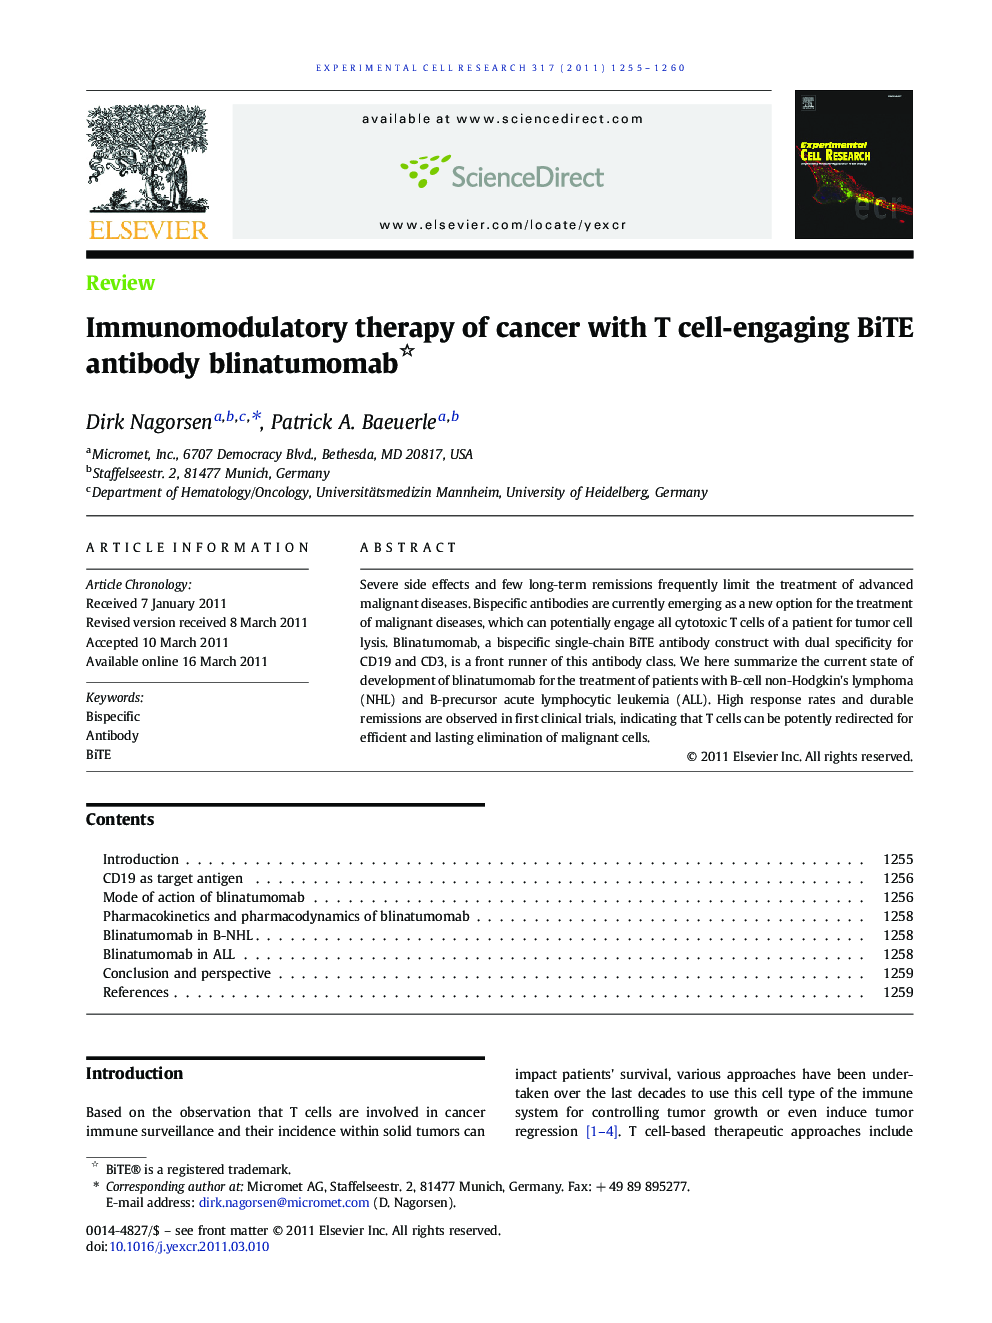 Immunomodulatory therapy of cancer with T cell-engaging BiTE antibody blinatumomab 